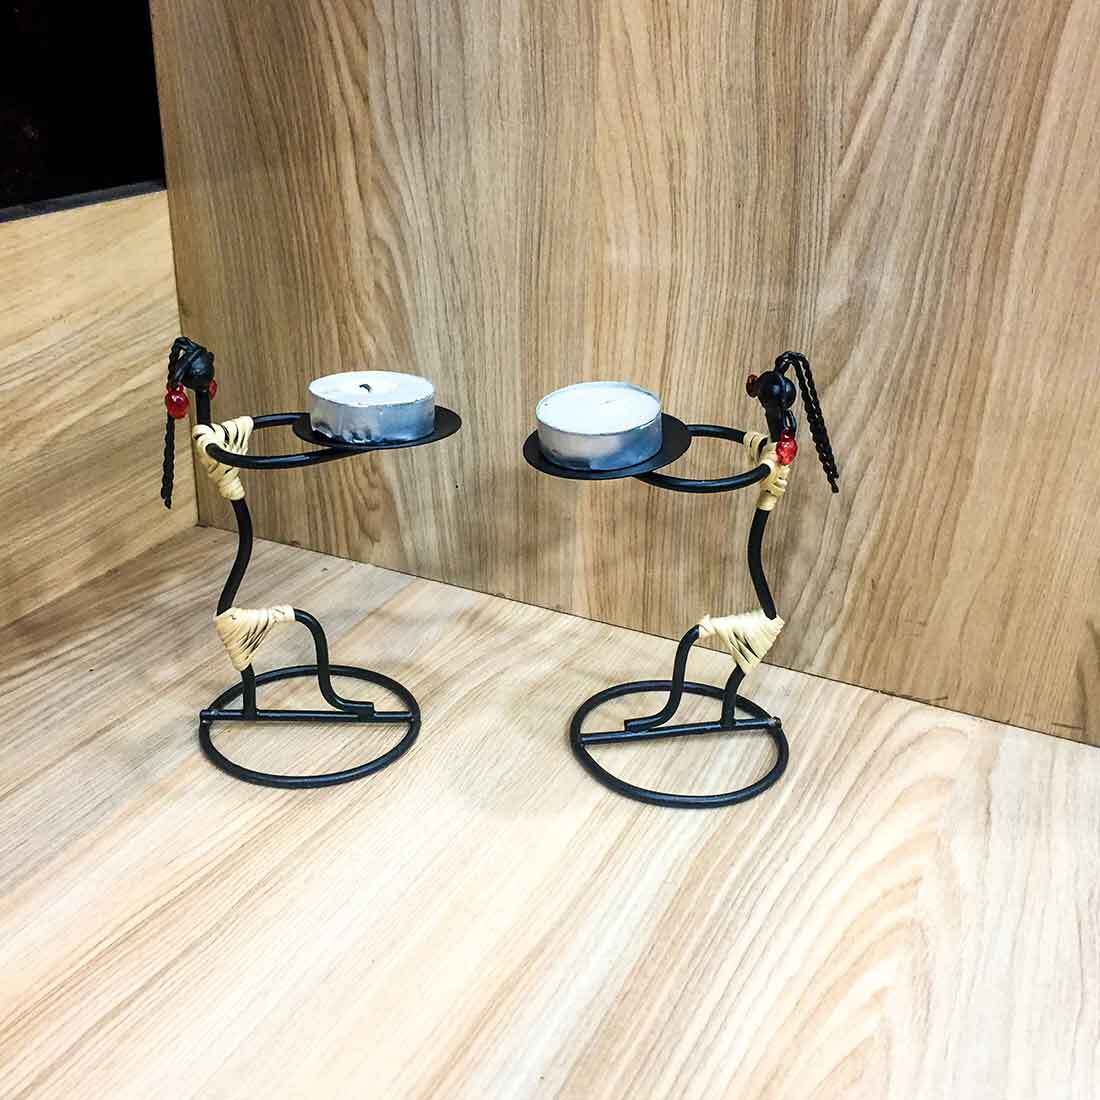 T Light Holder Lady Design - For Table & Wall Decor - 5 Inch - Set of 2 - ApkaMart